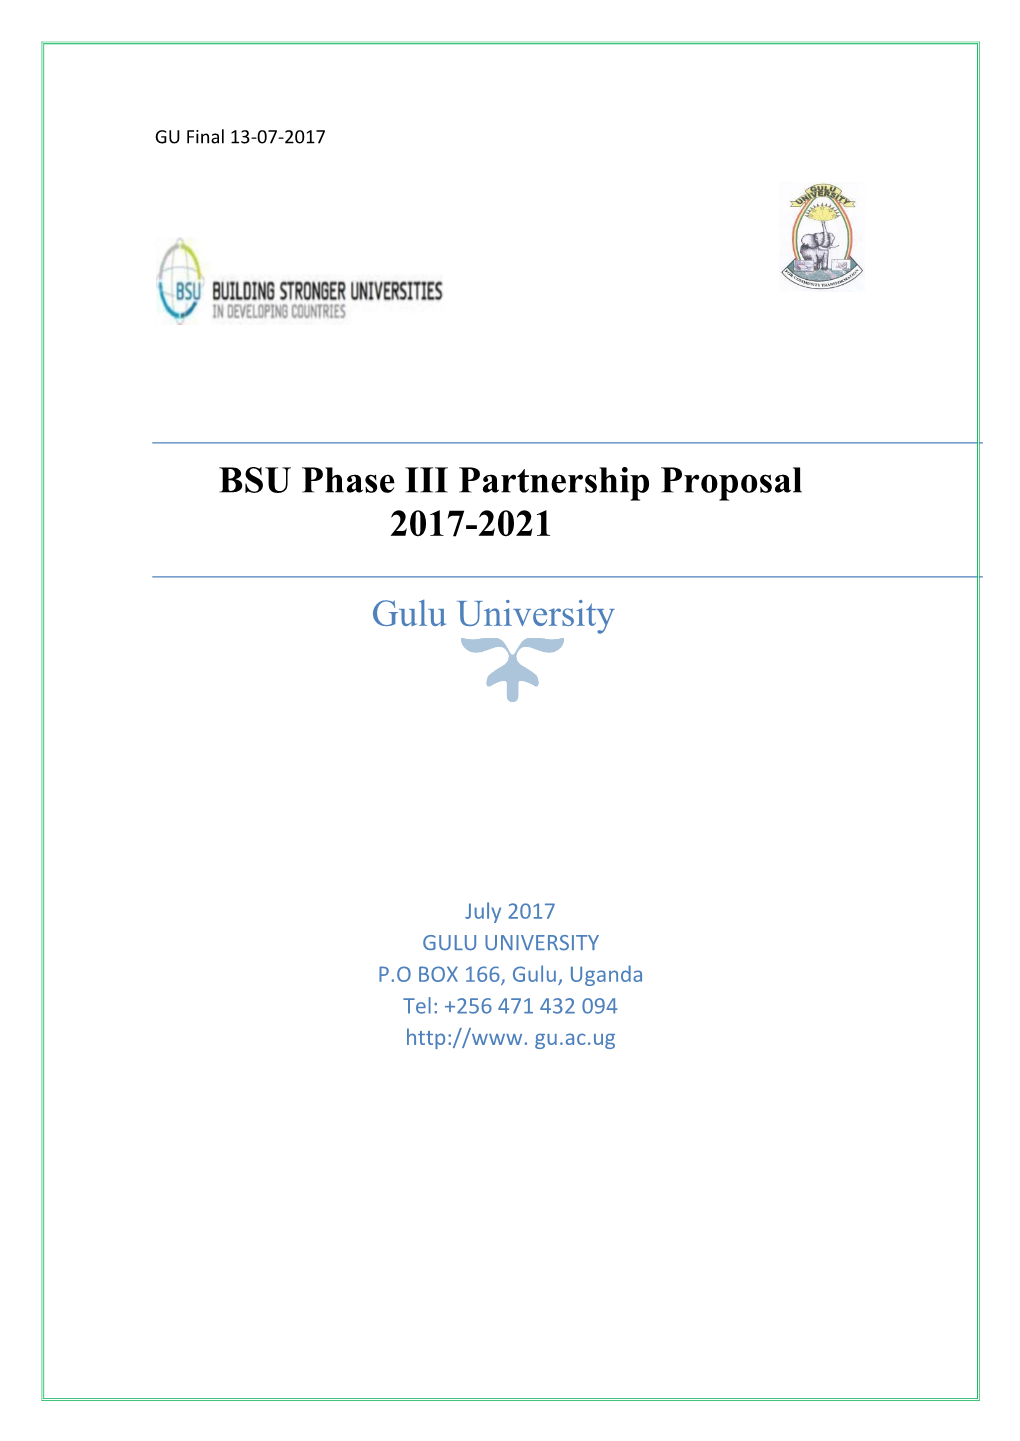 BSU Phase III Partnership Proposal 2017-2021 Gulu University